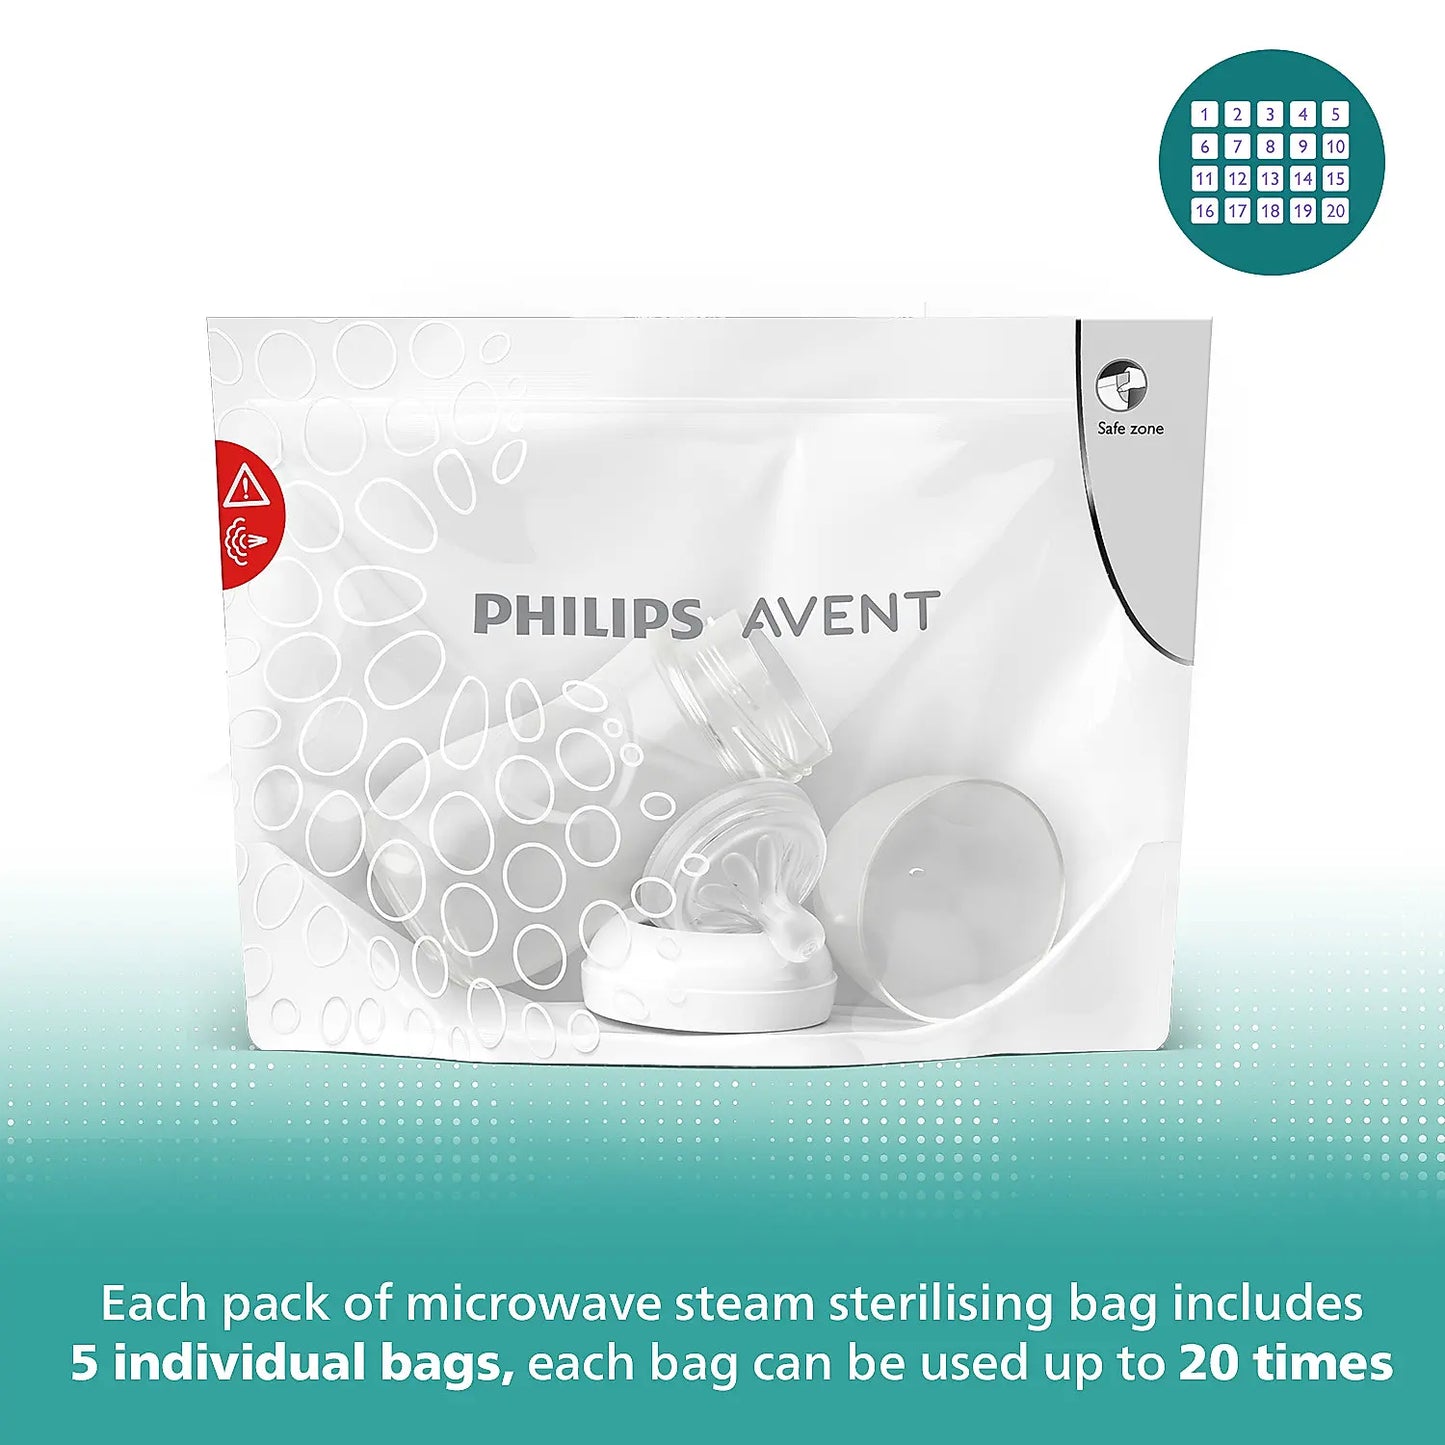 Philips Avent Microwave Steriliser Bag Pack of 5 Bags for 100 uses